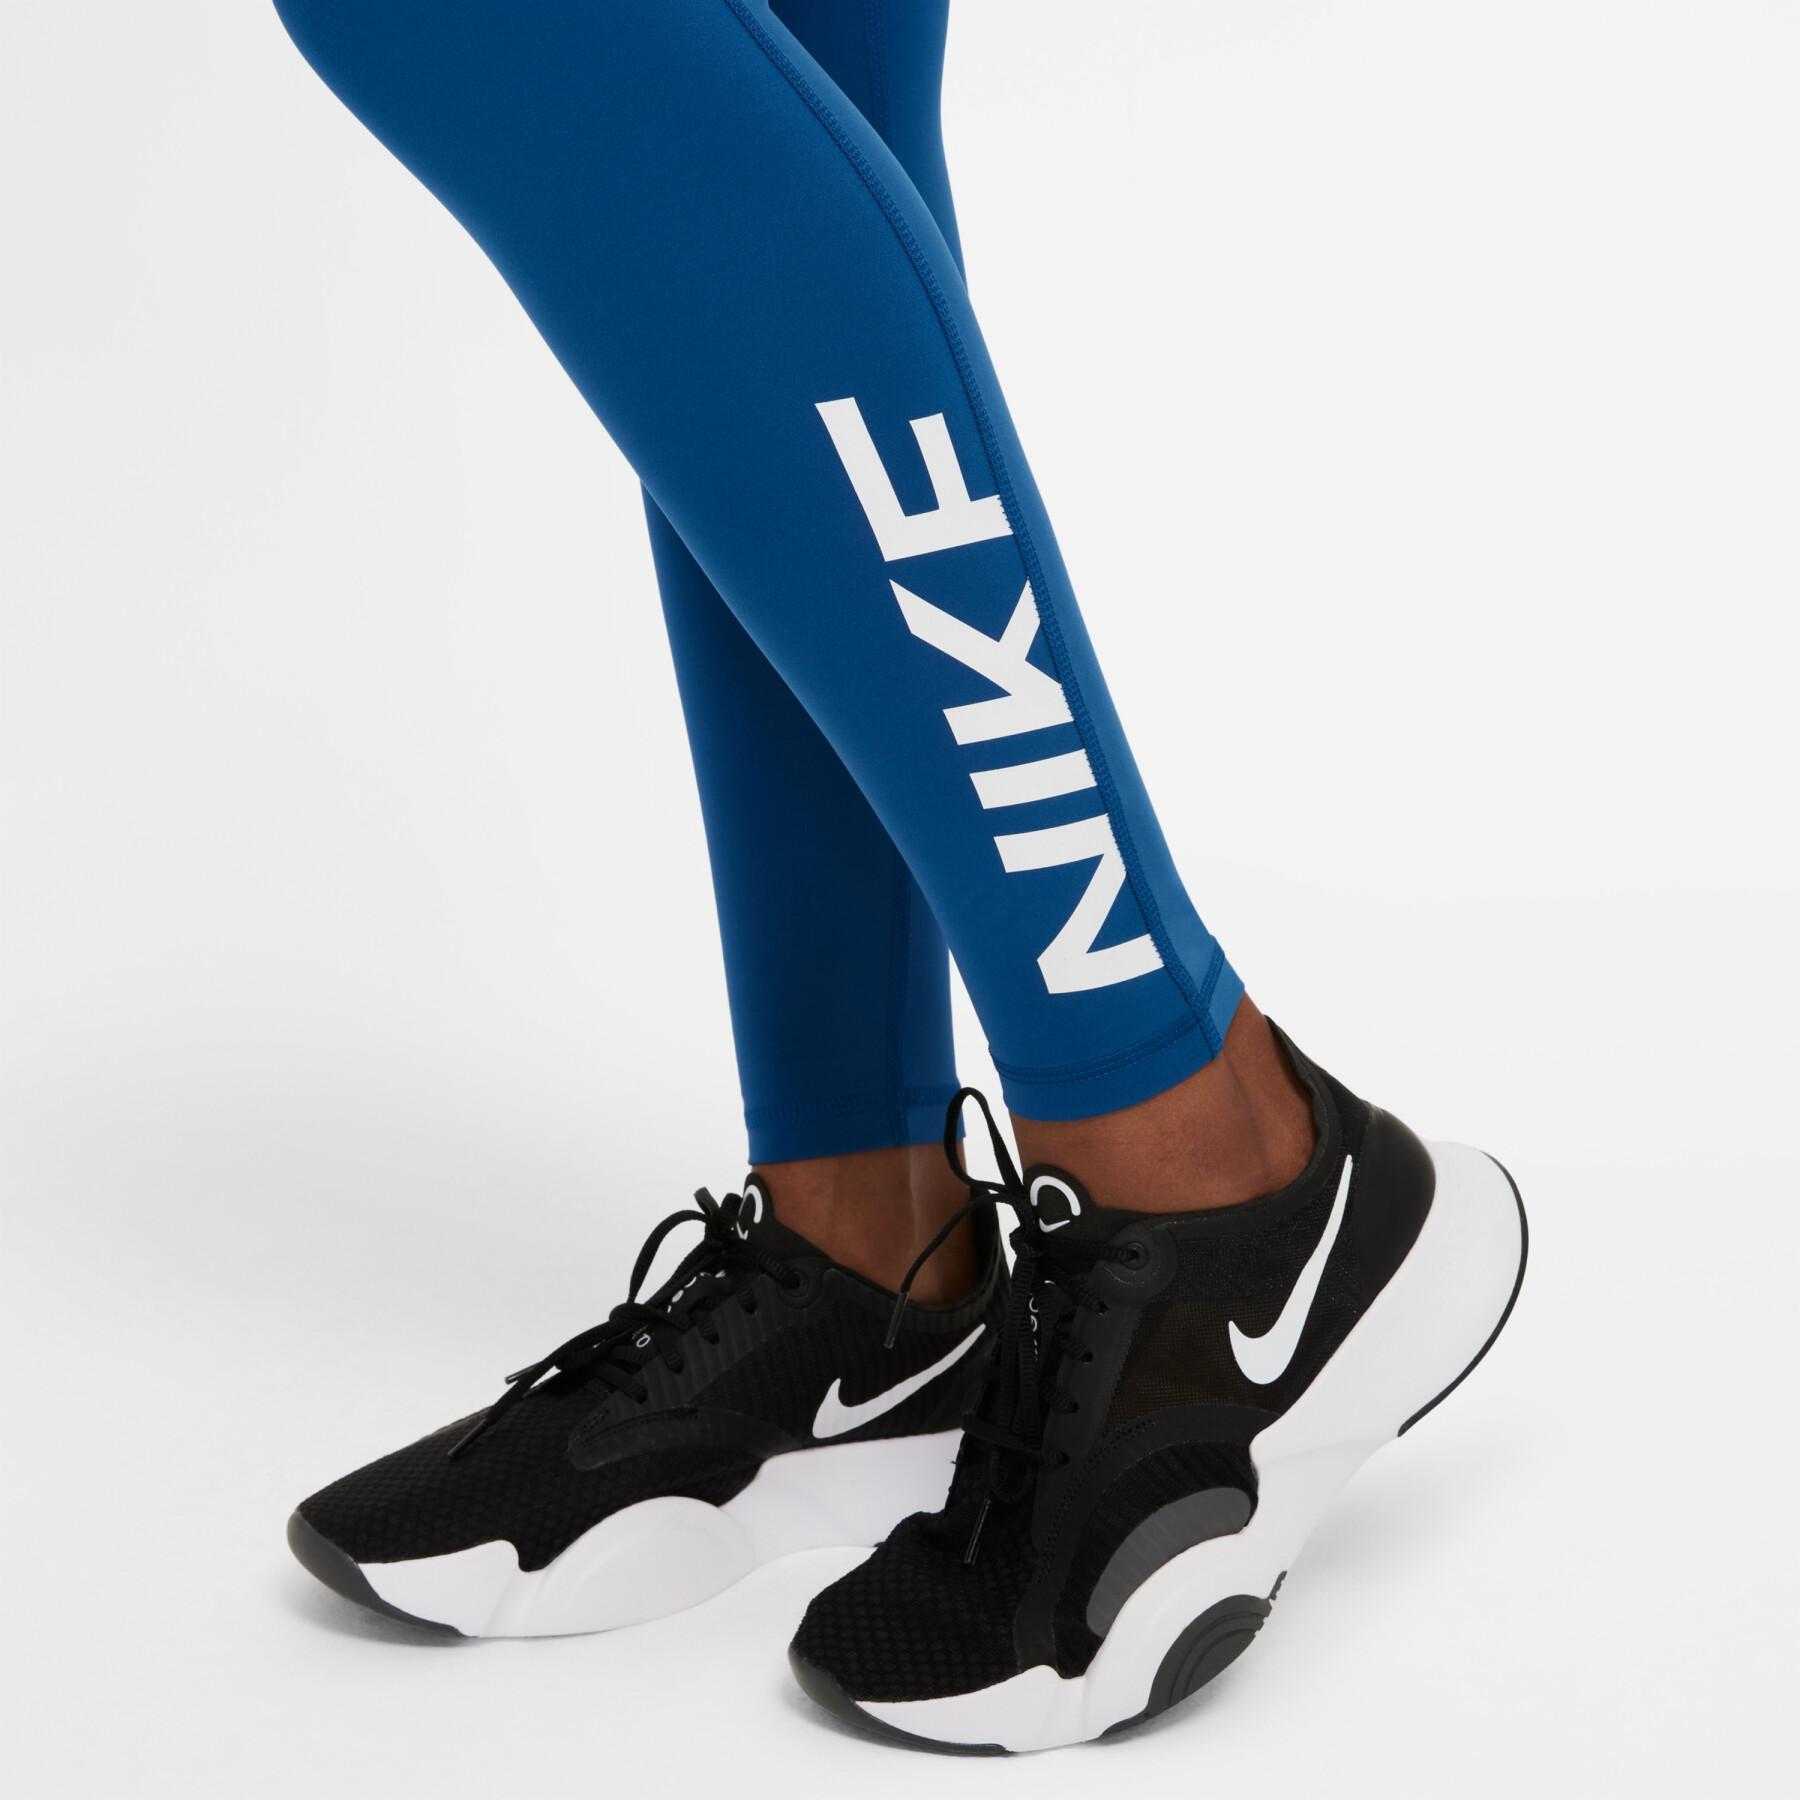 Pernas de mulher Nike grx tgt